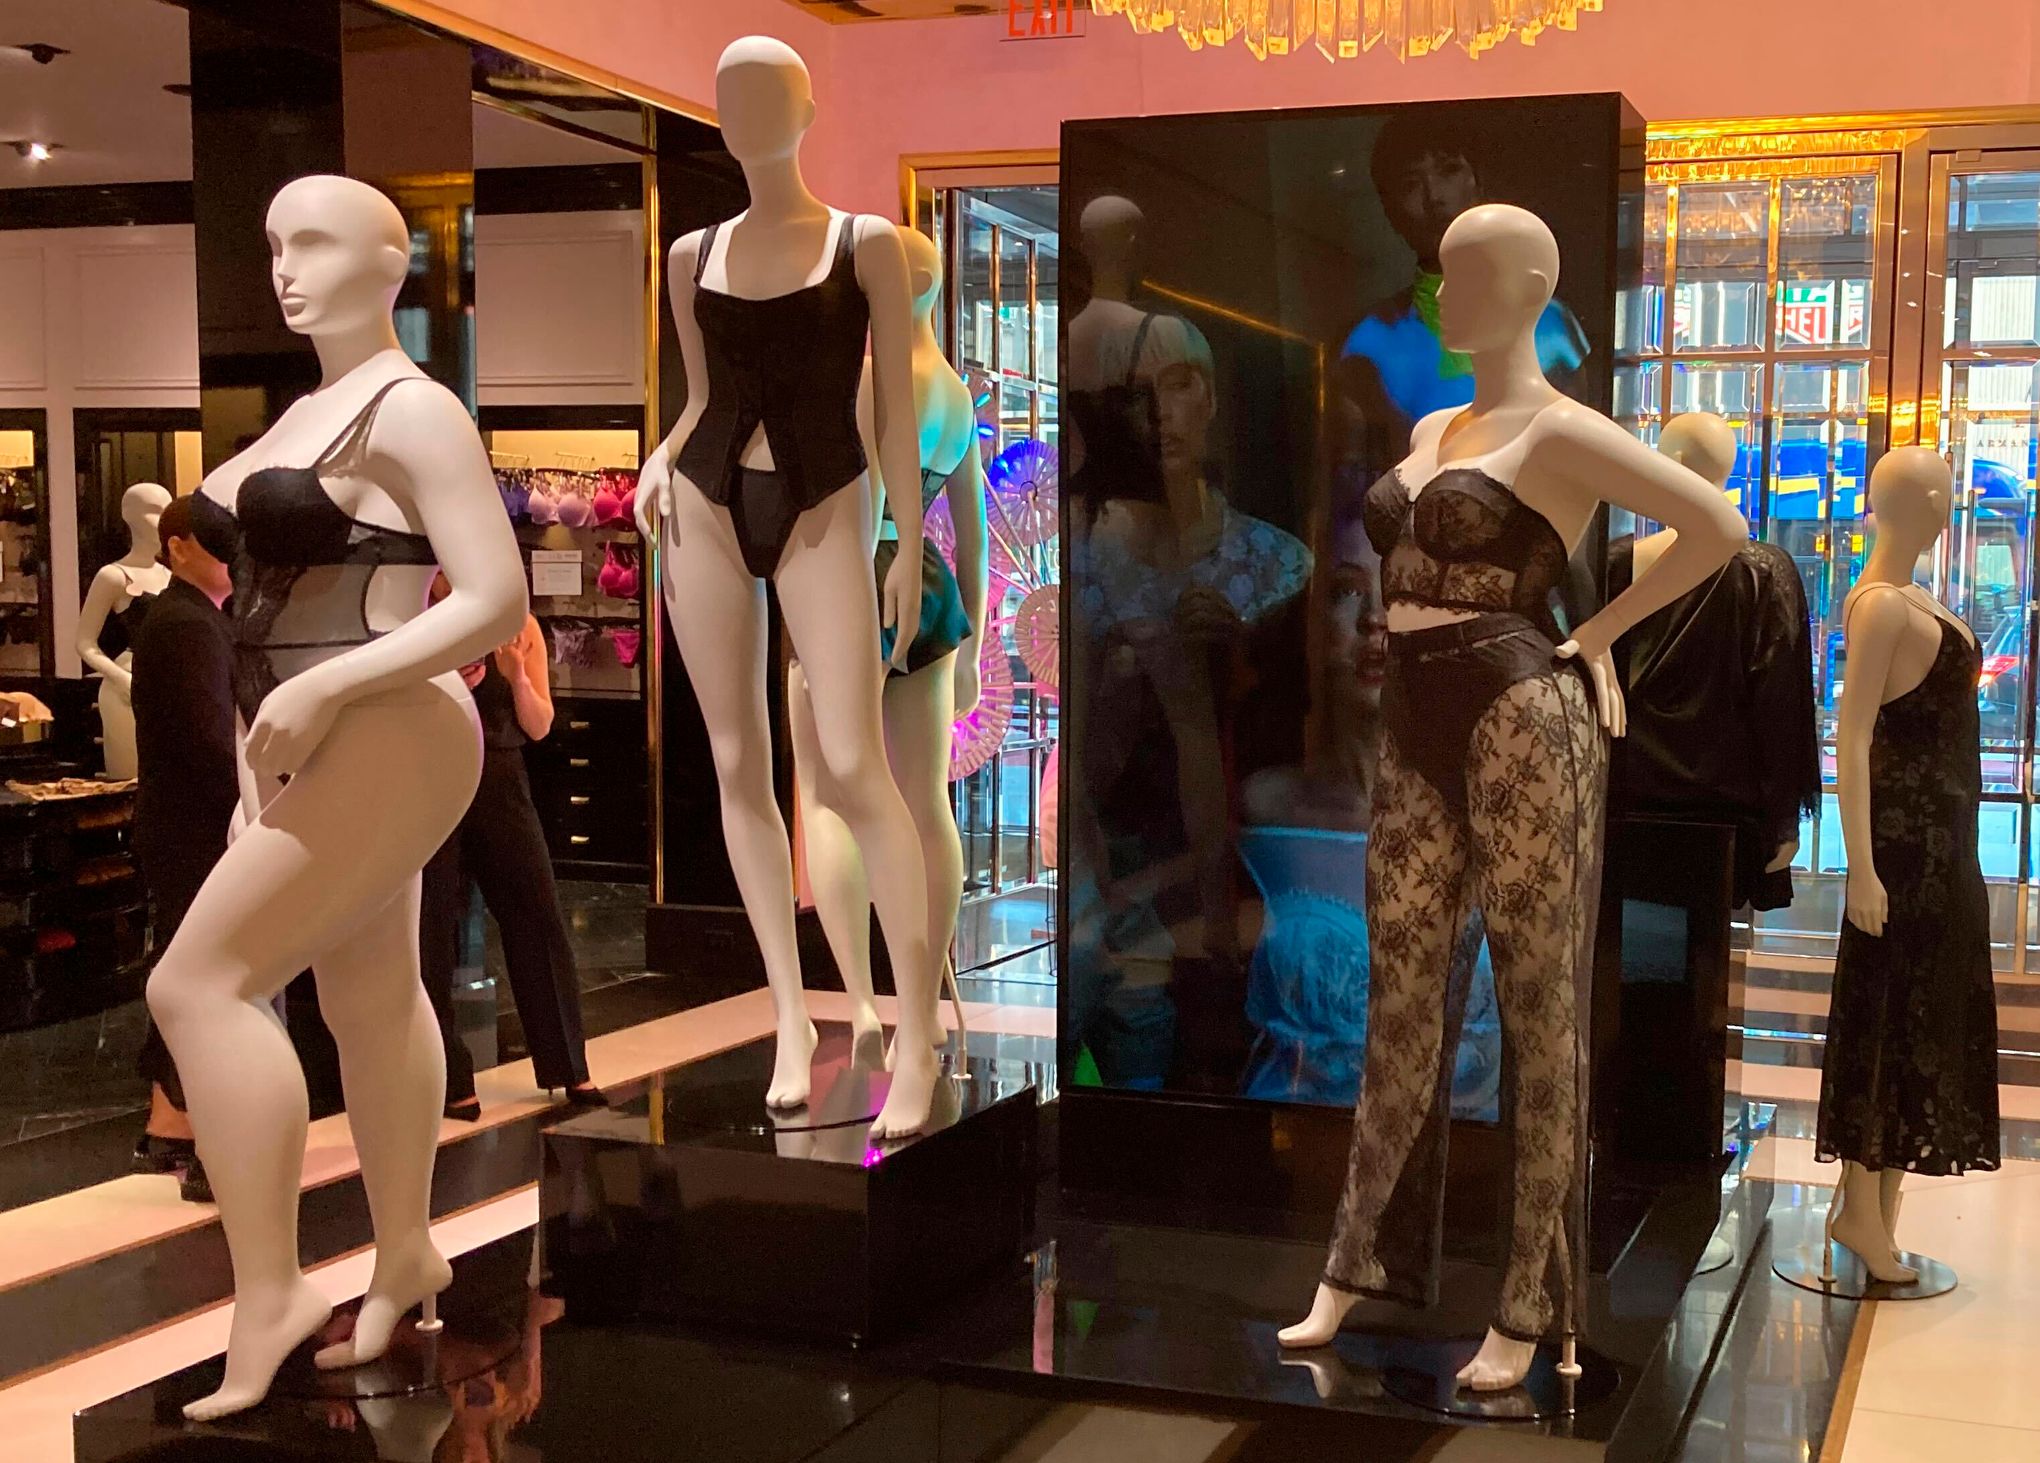 Is Victoria's Secret's inclusivity messaging resonating? - RetailWire